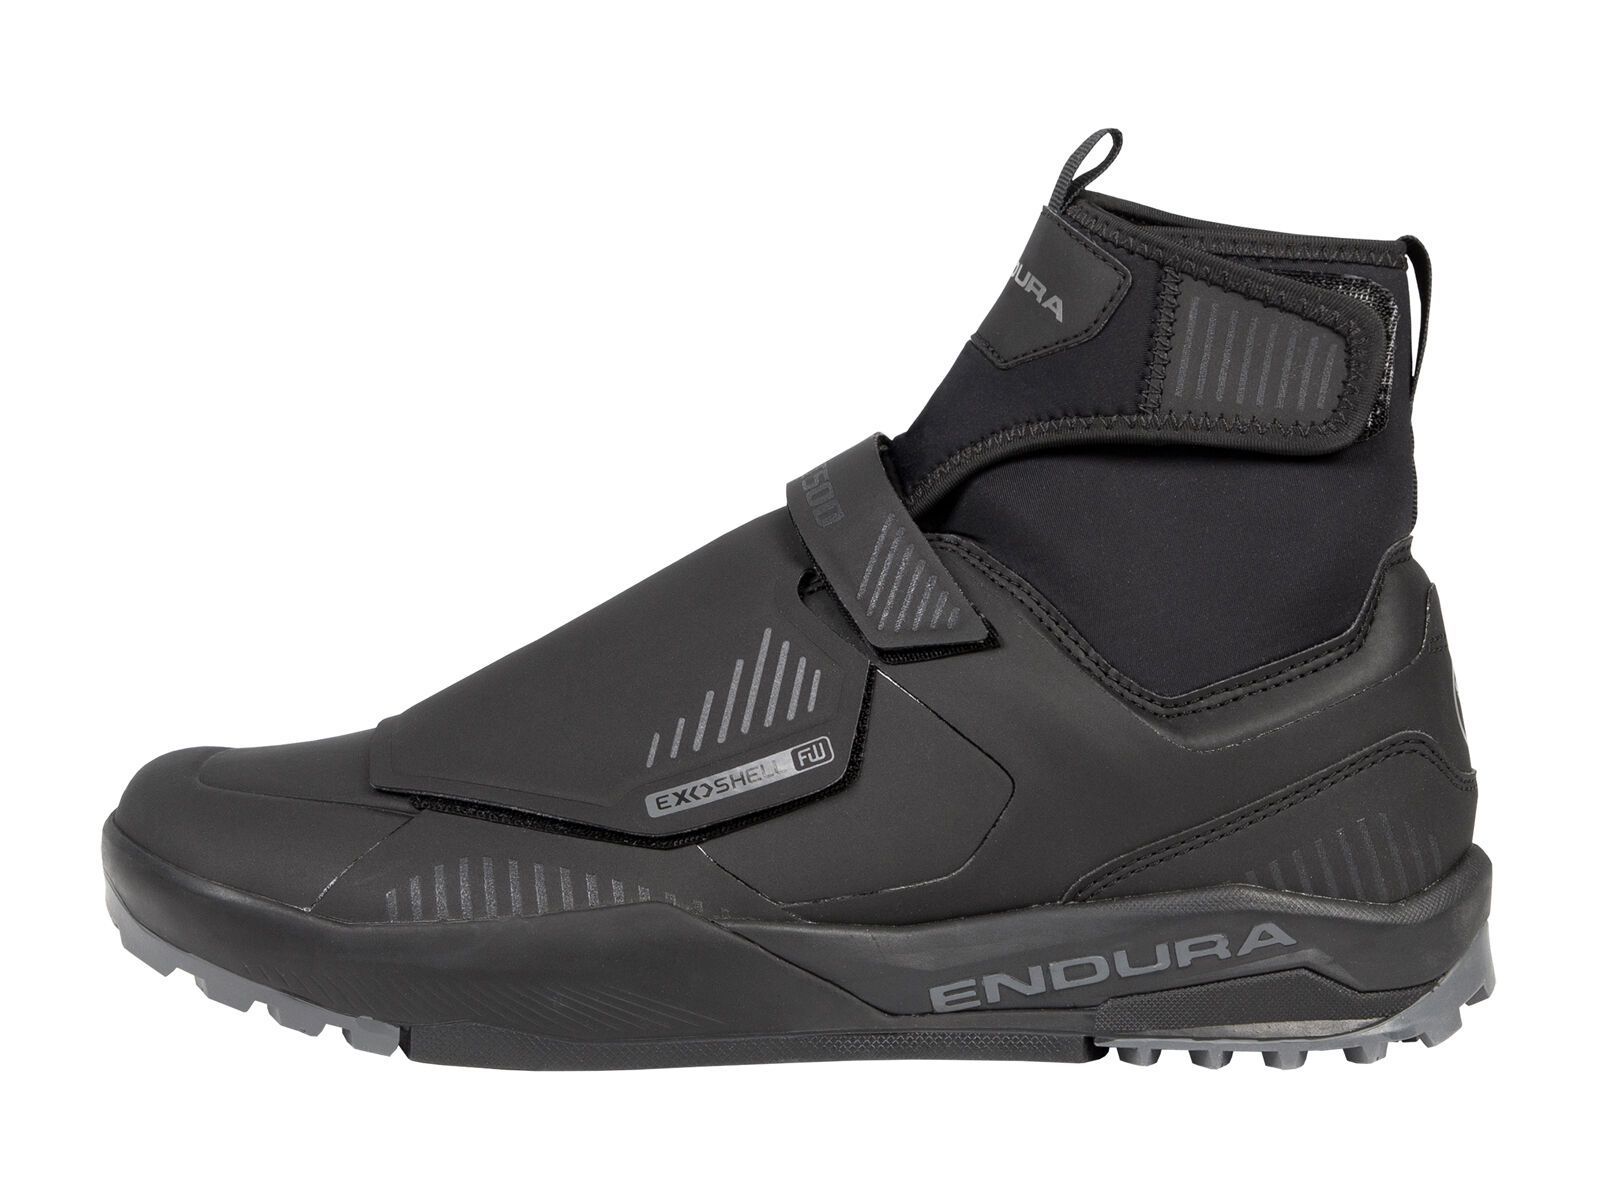 Endura MT500 Burner Flat Wasserdichter Schuh schwarz 41.5 E9507BK/41.5